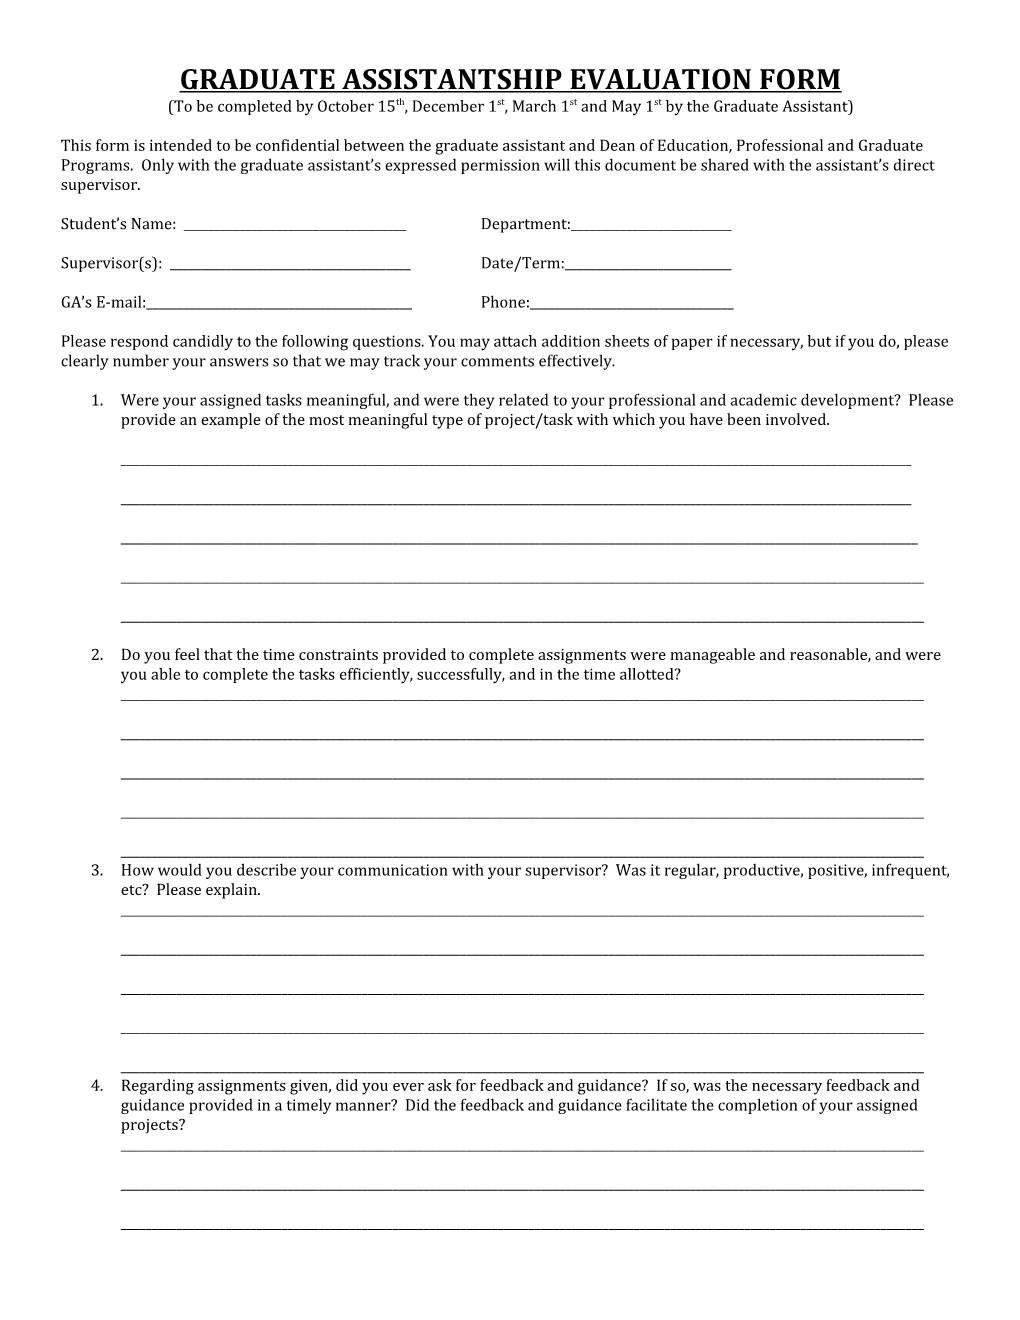 Graduate Assistantship Evaluation Form